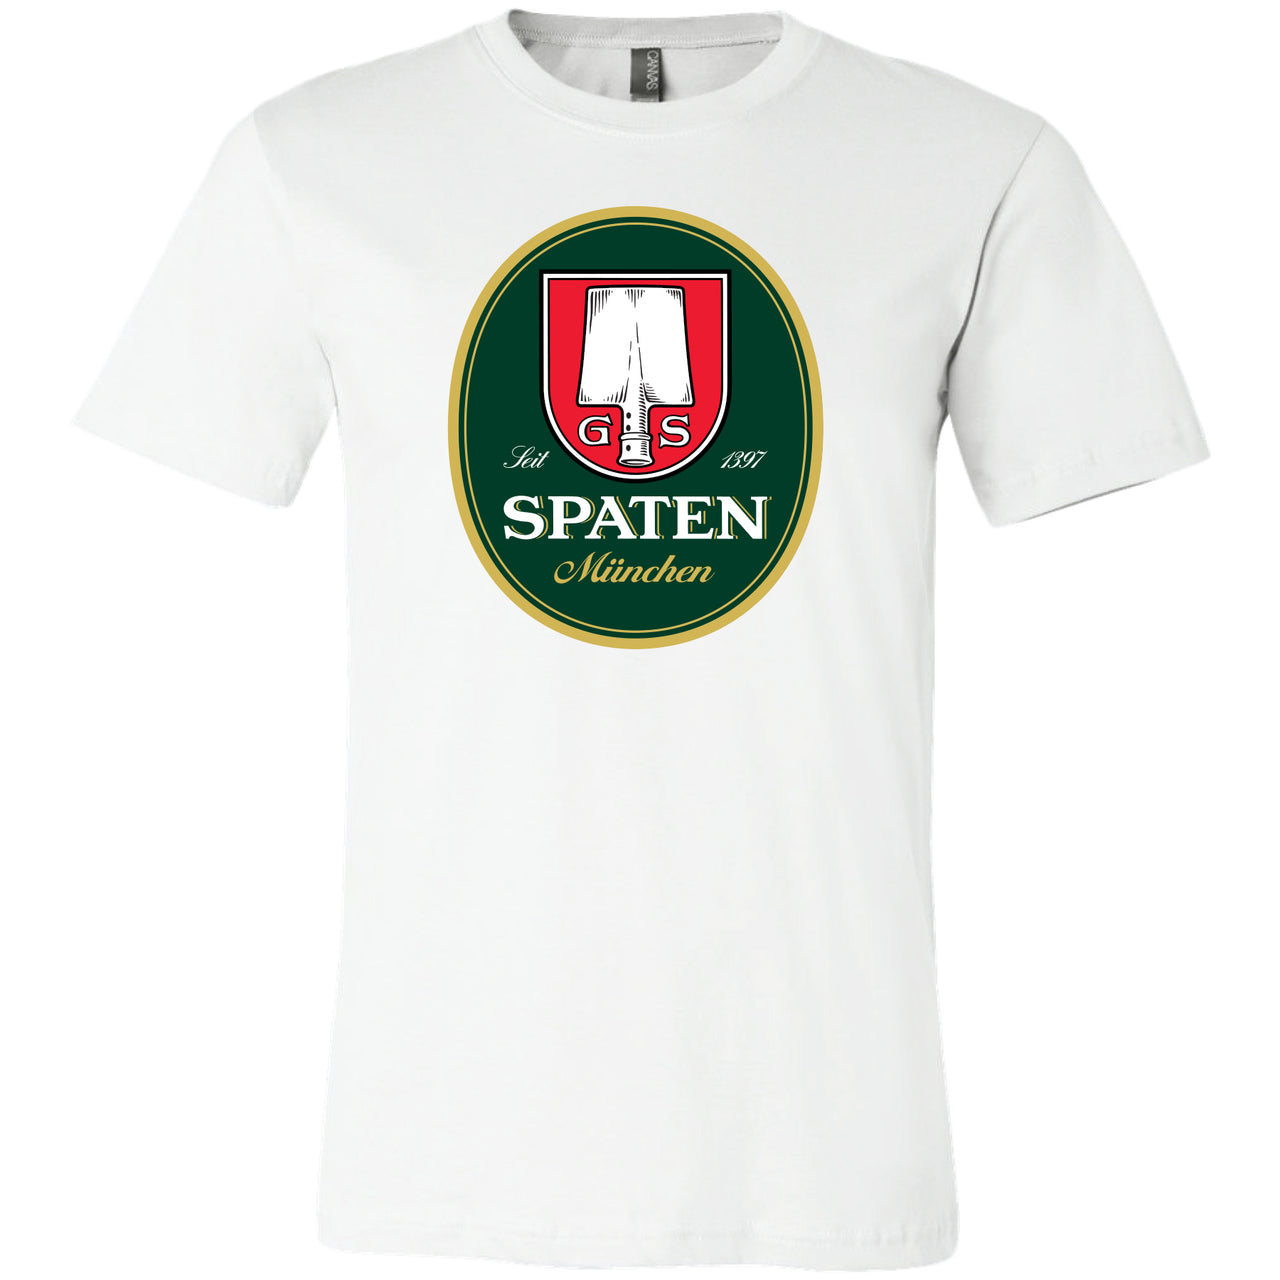 Spaten Oval Logo T-Shirt